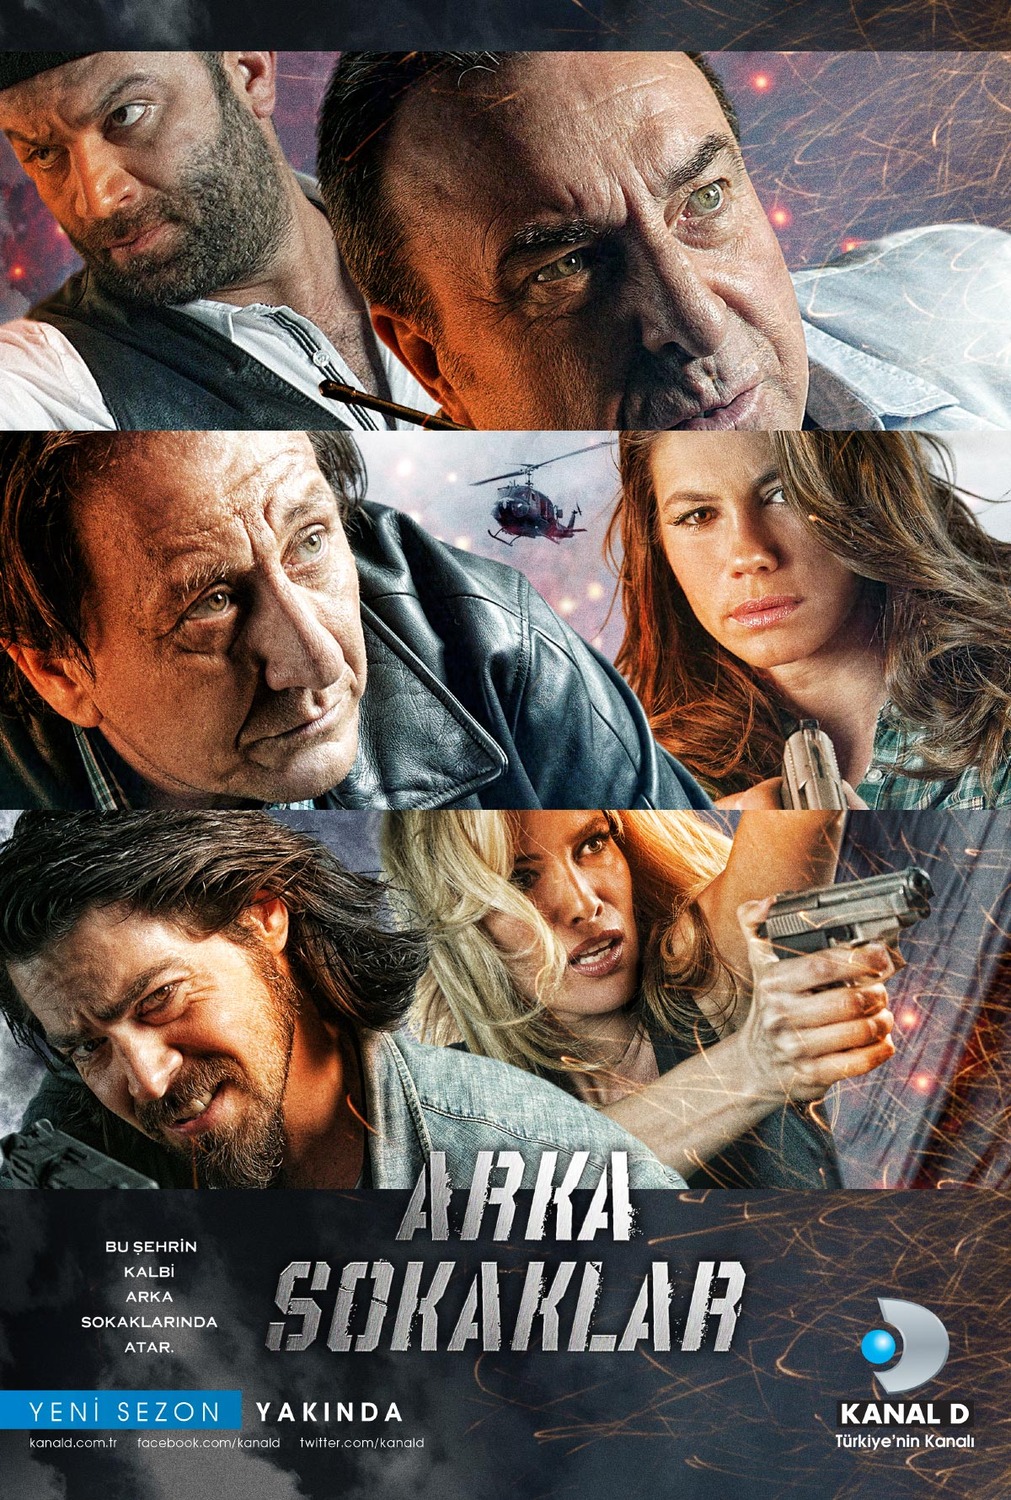 Extra Large TV Poster Image for Arka sokaklar (#2 of 11)